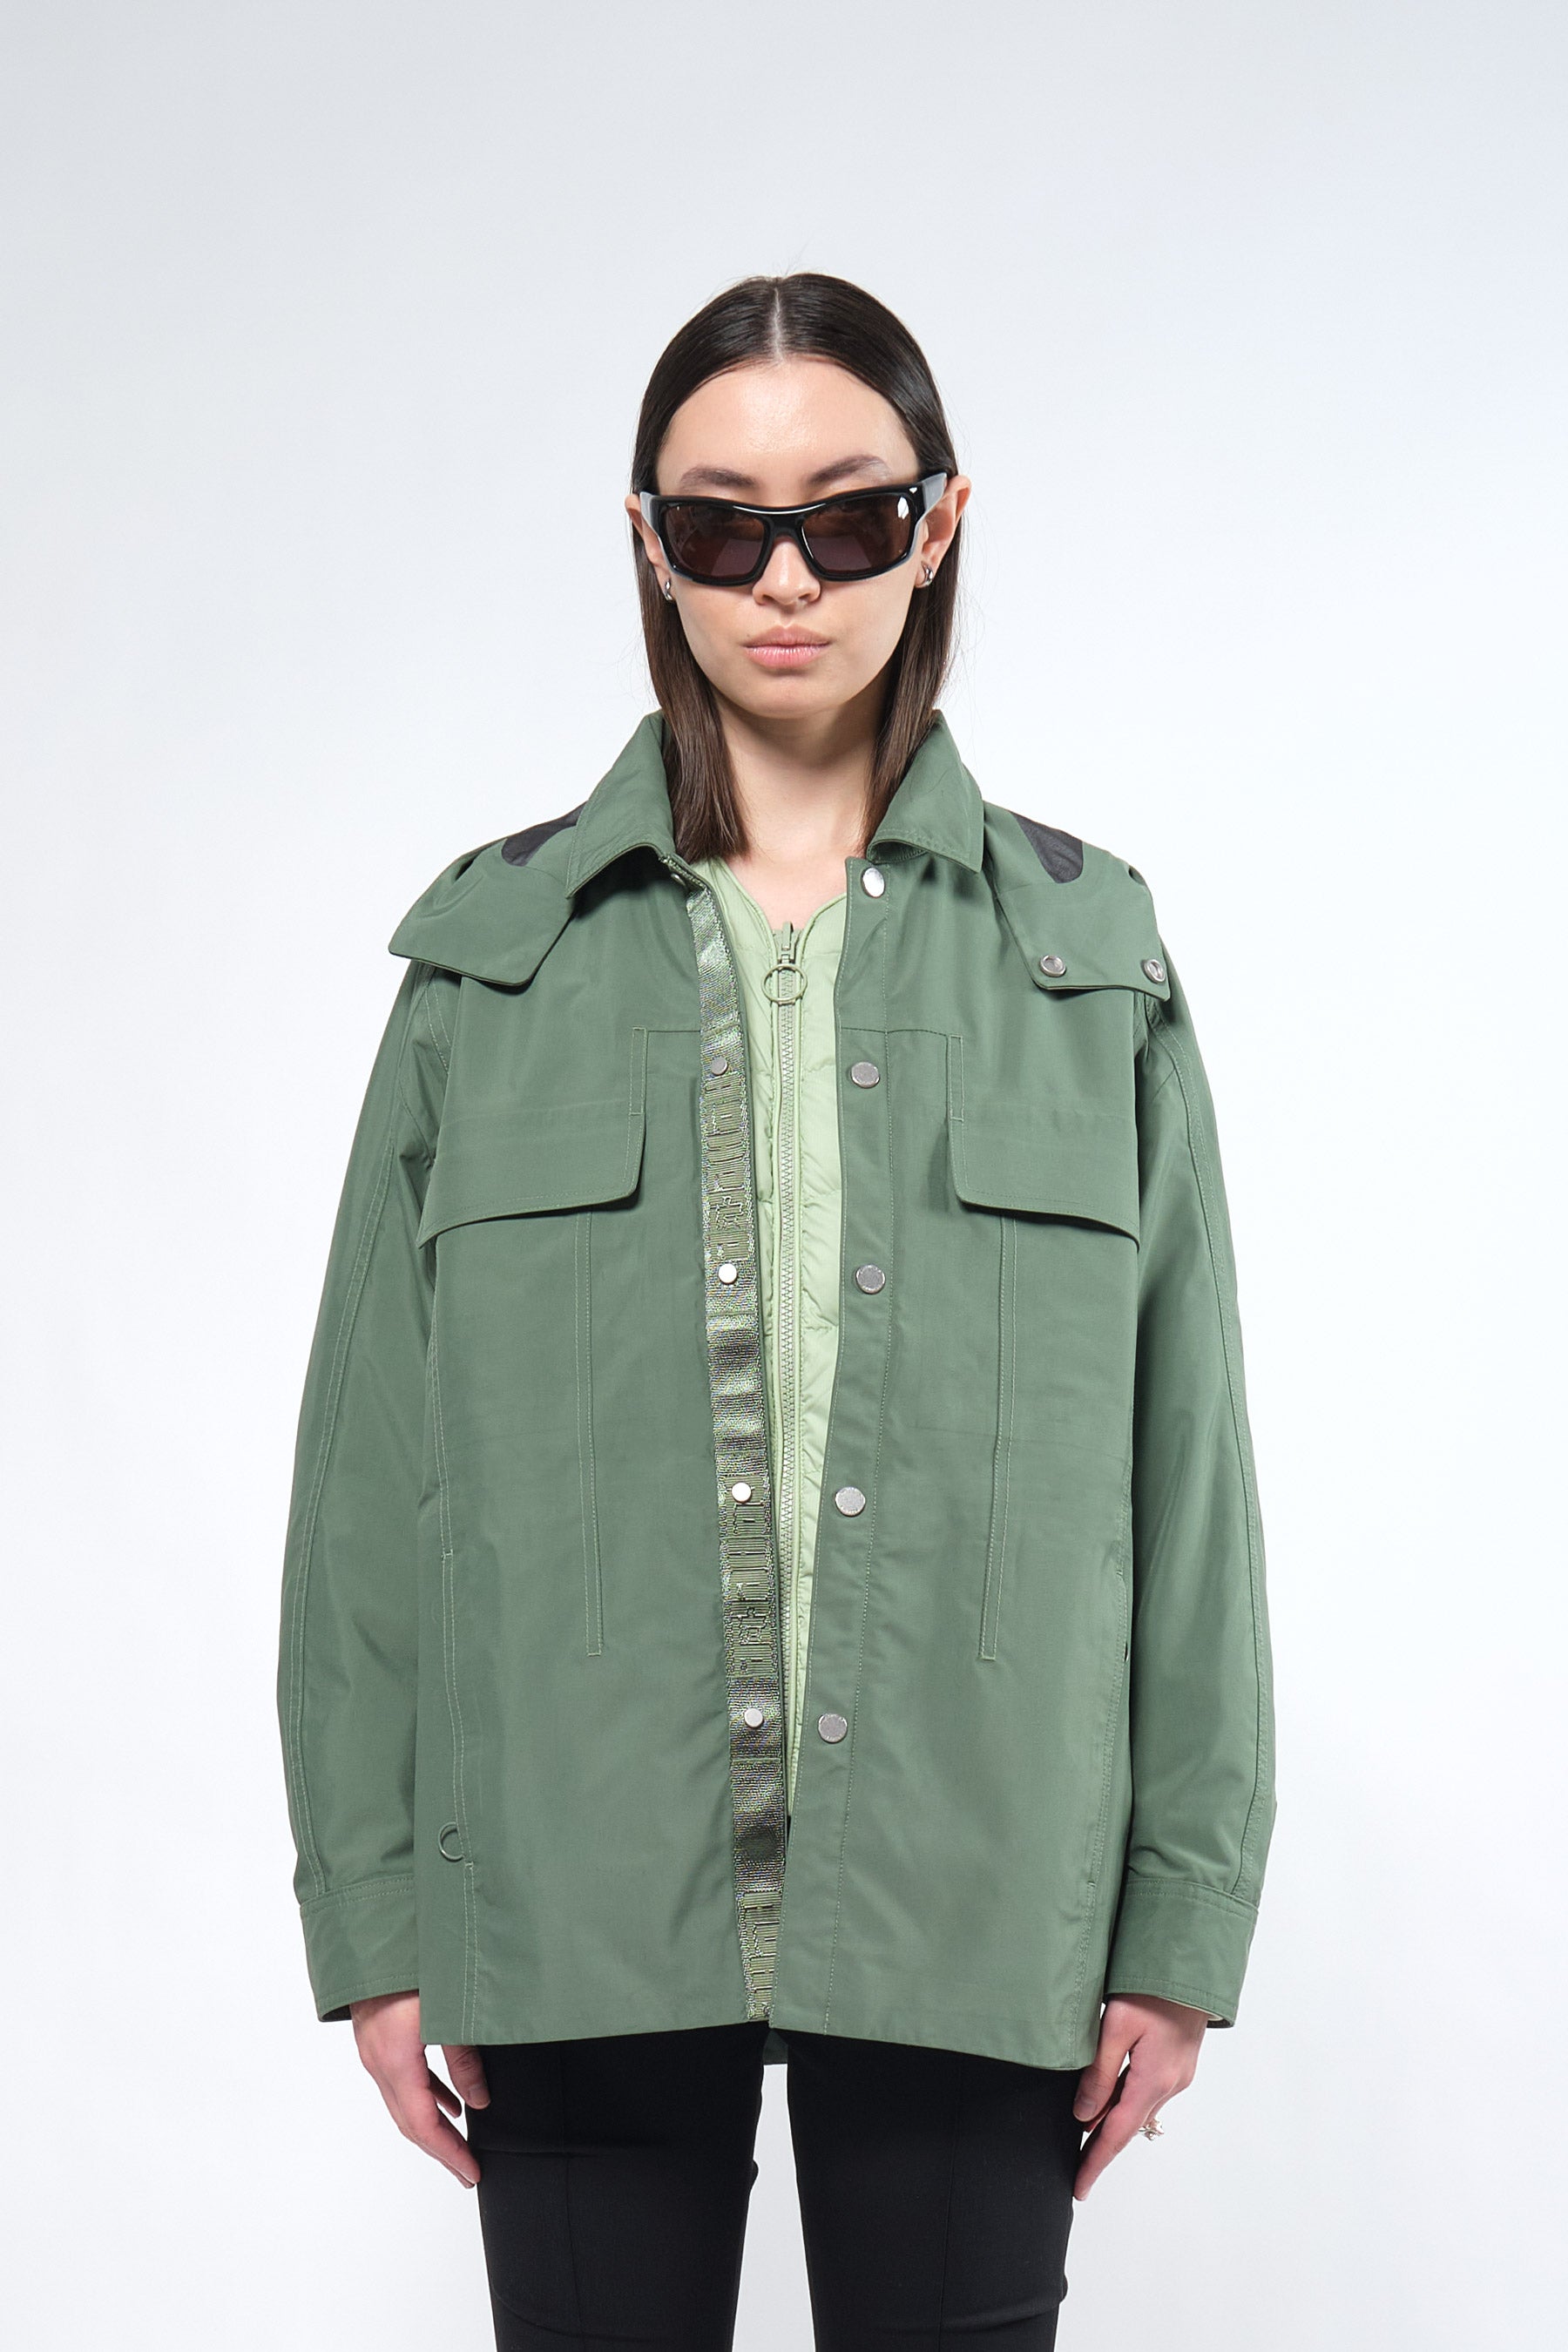  3L Green Waterproof Rain Jacket with Hood - Adhere To  - 4